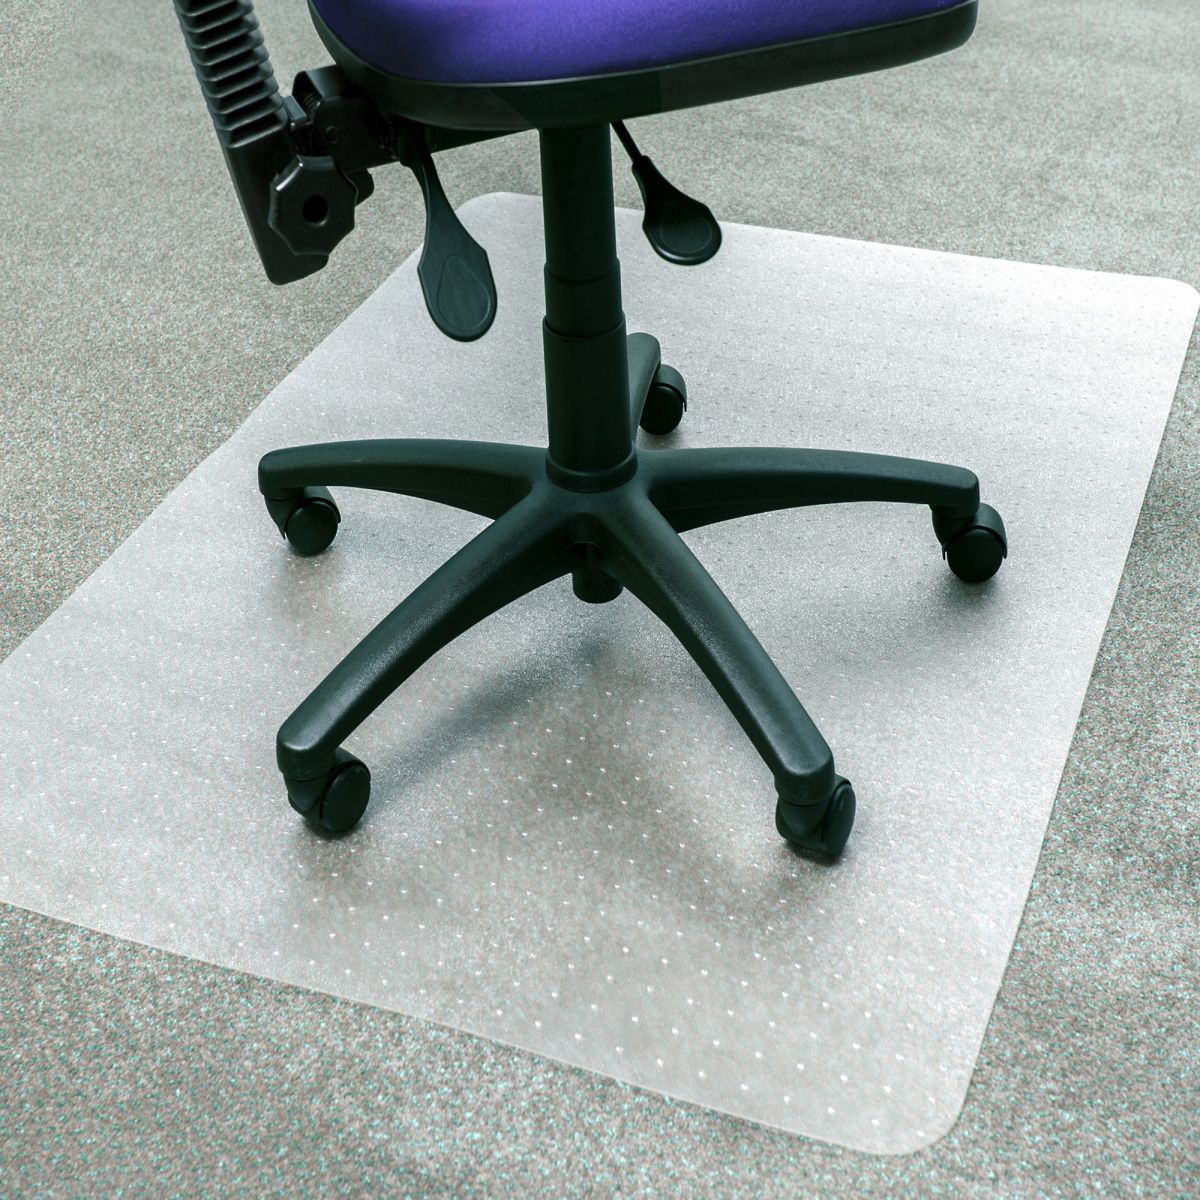 CHAIR MAT - CARPET PVC  90 X 120 Home office chairs CasaFenix